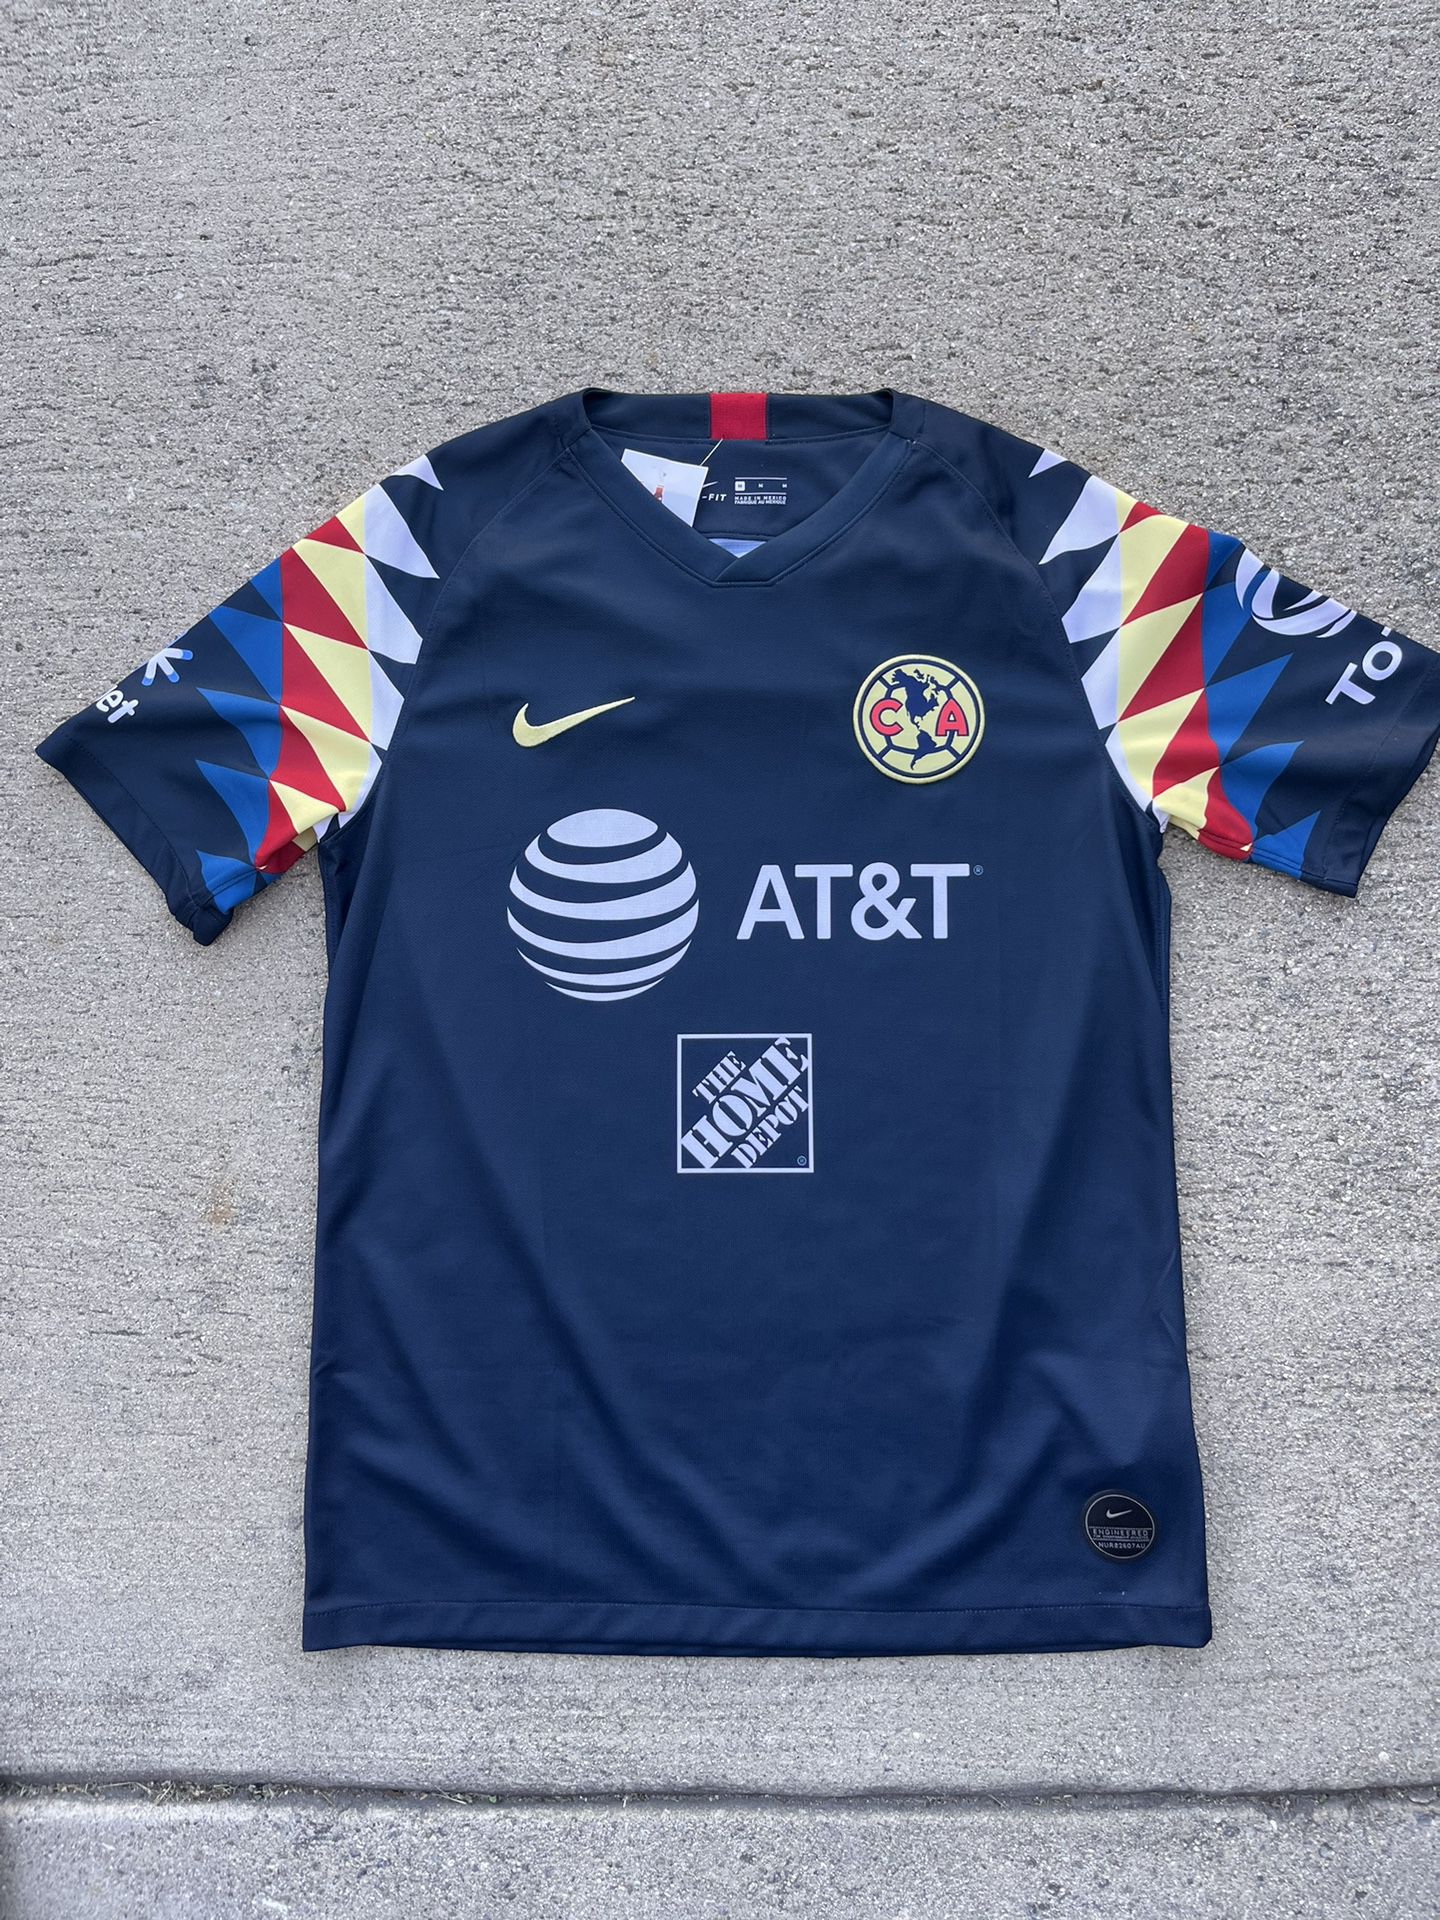 Nike Club America Away Football Shirt 2019/20  Size Medium 